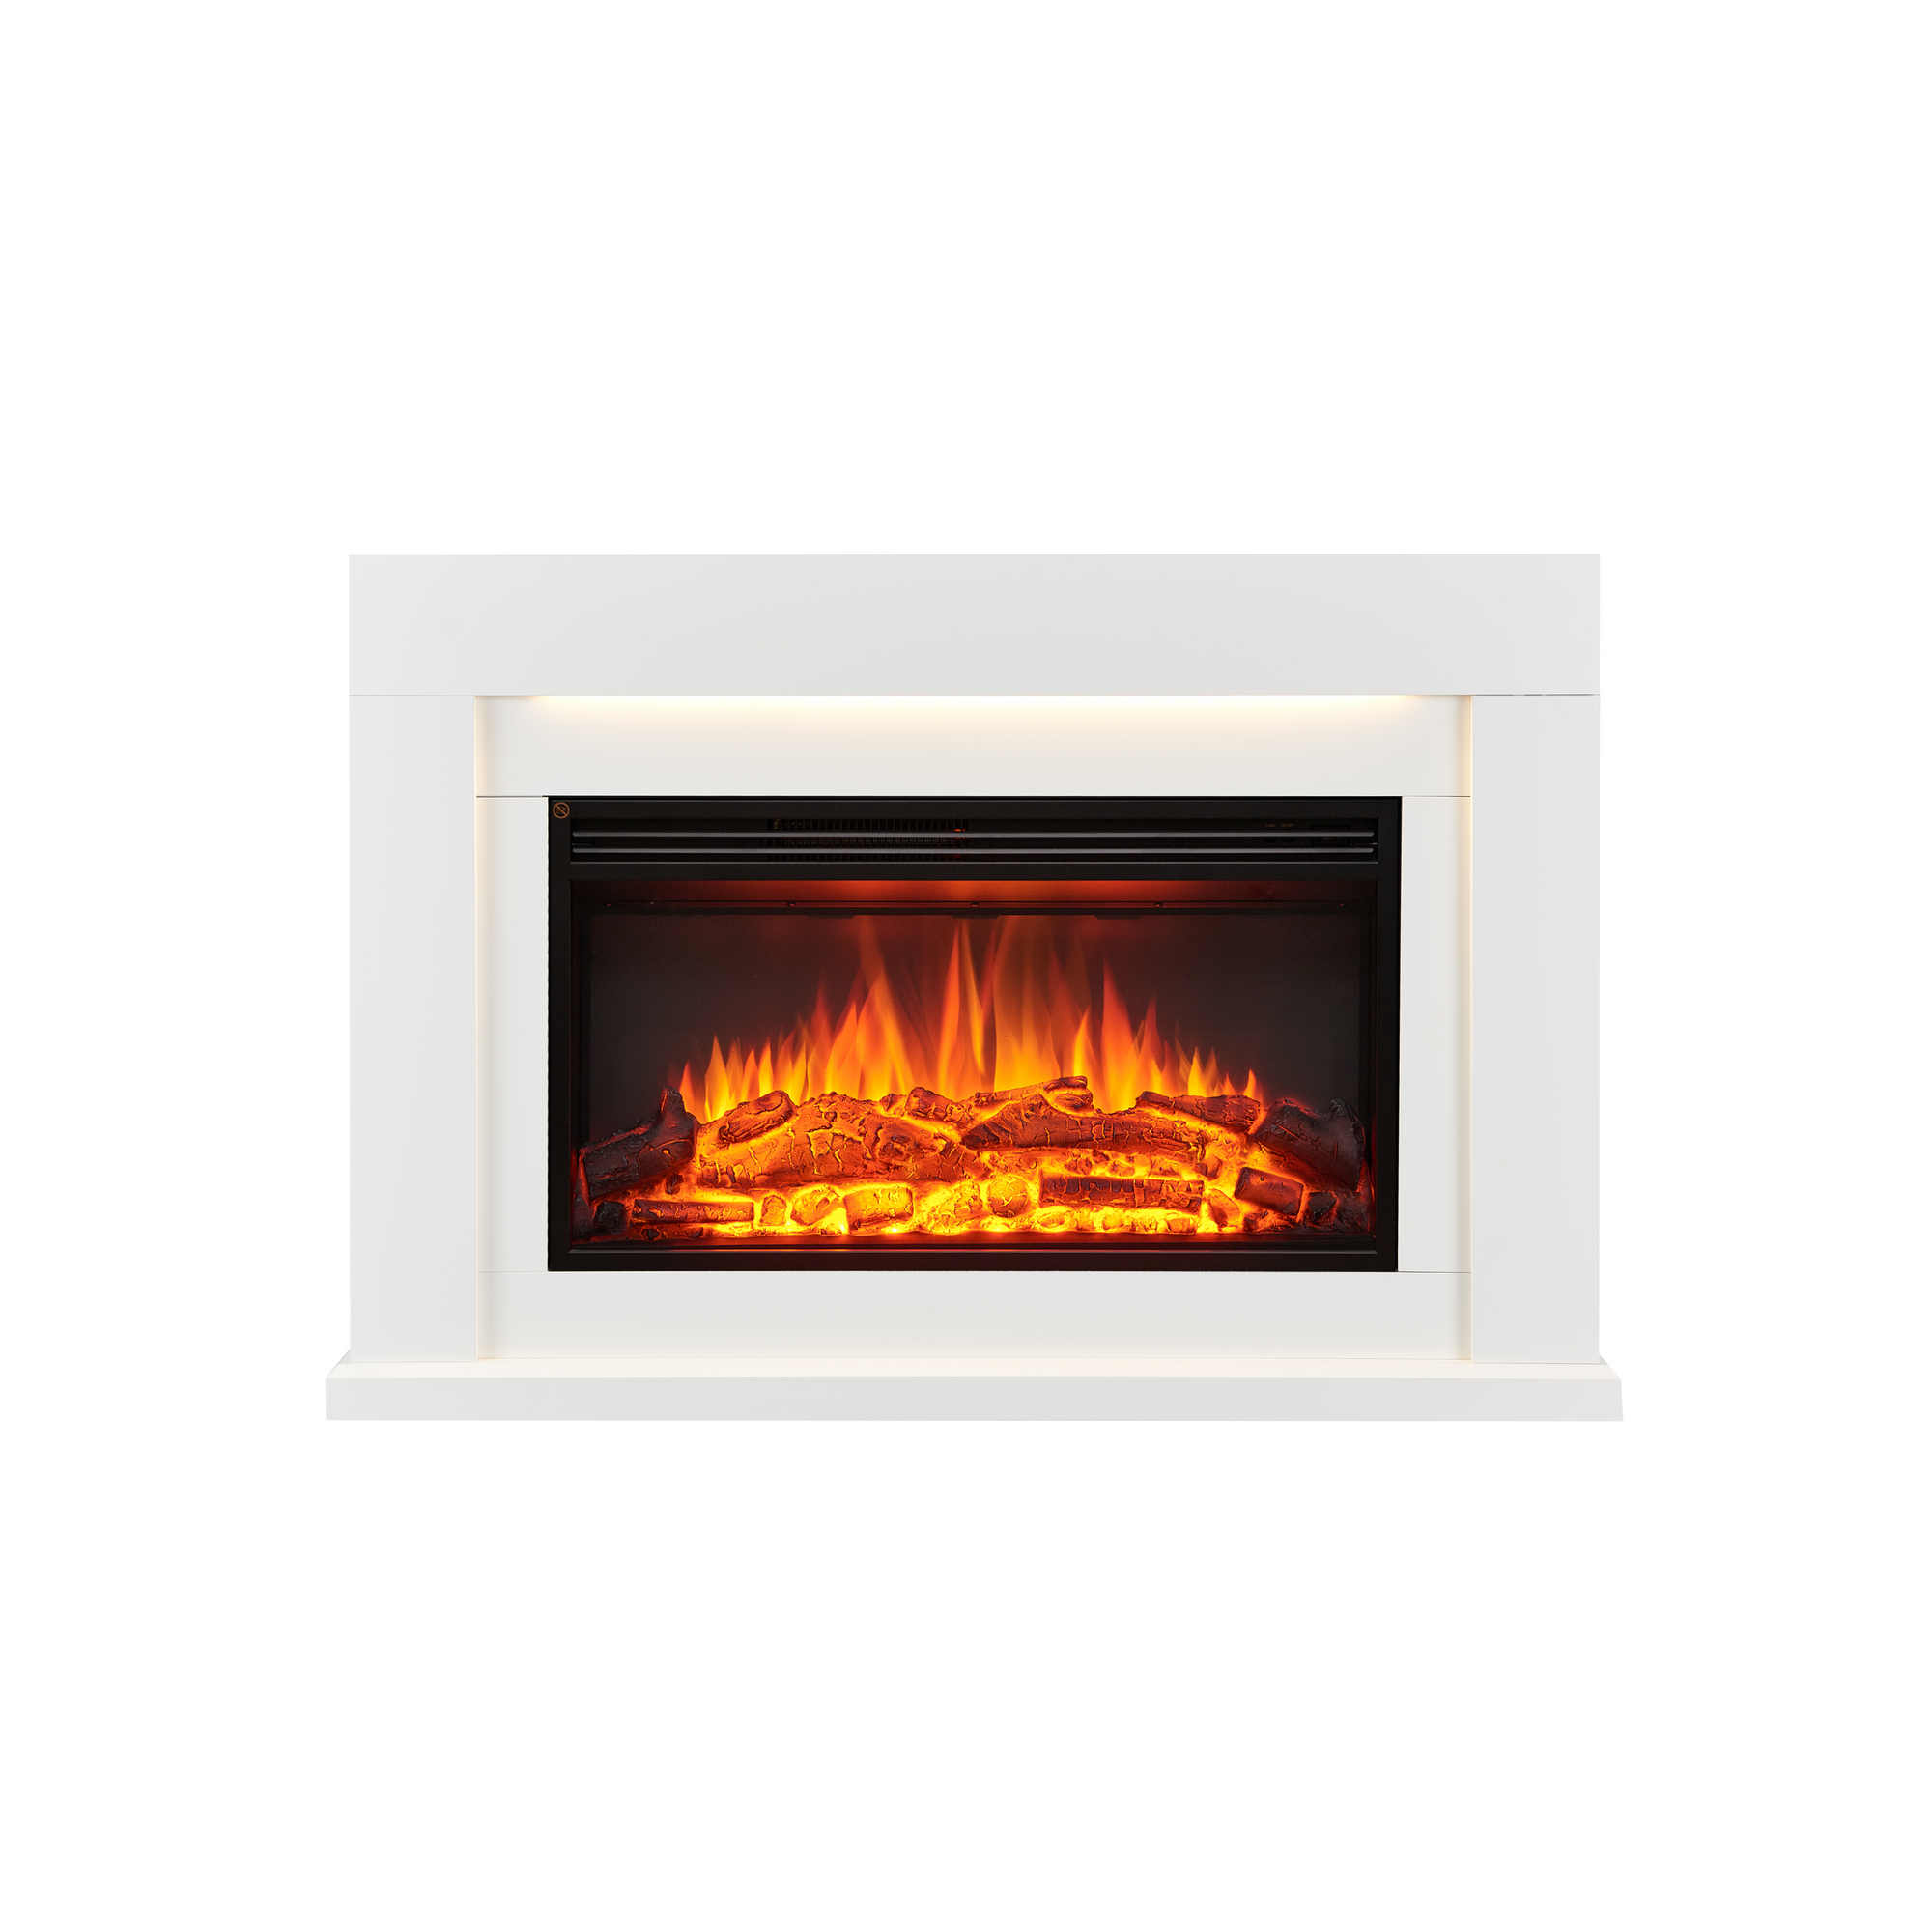 Elektro-Eckkamin 'Xerxes' weiß 2000 W, 3D-Flammeneffekt Fernbedienung 118 x 79,5 x 21,8 cm + product picture